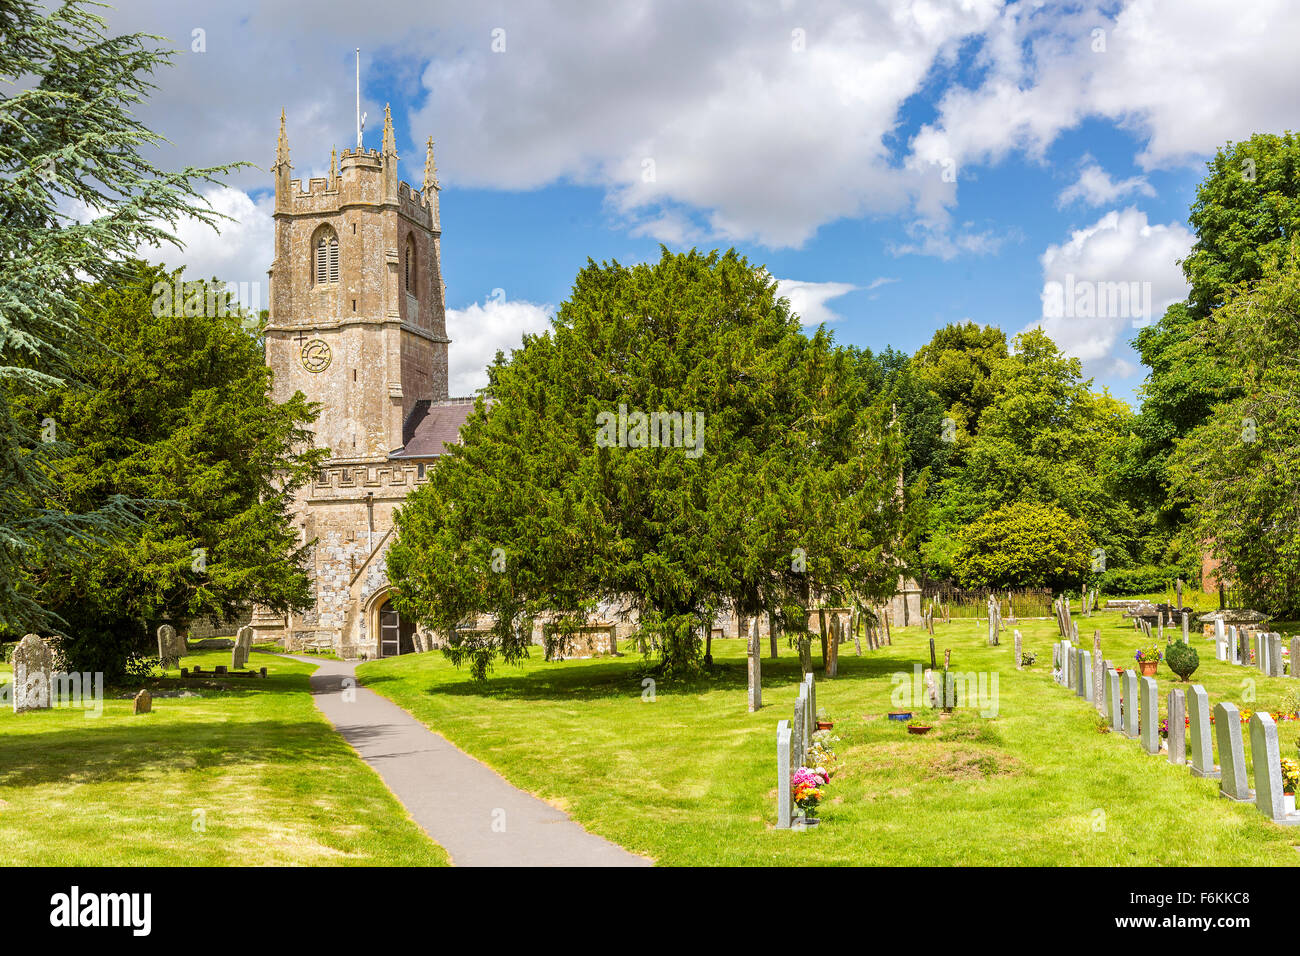 St. James Church, Avebury, Wiltshire, England, United Kingdom, Europe. Stock Photo